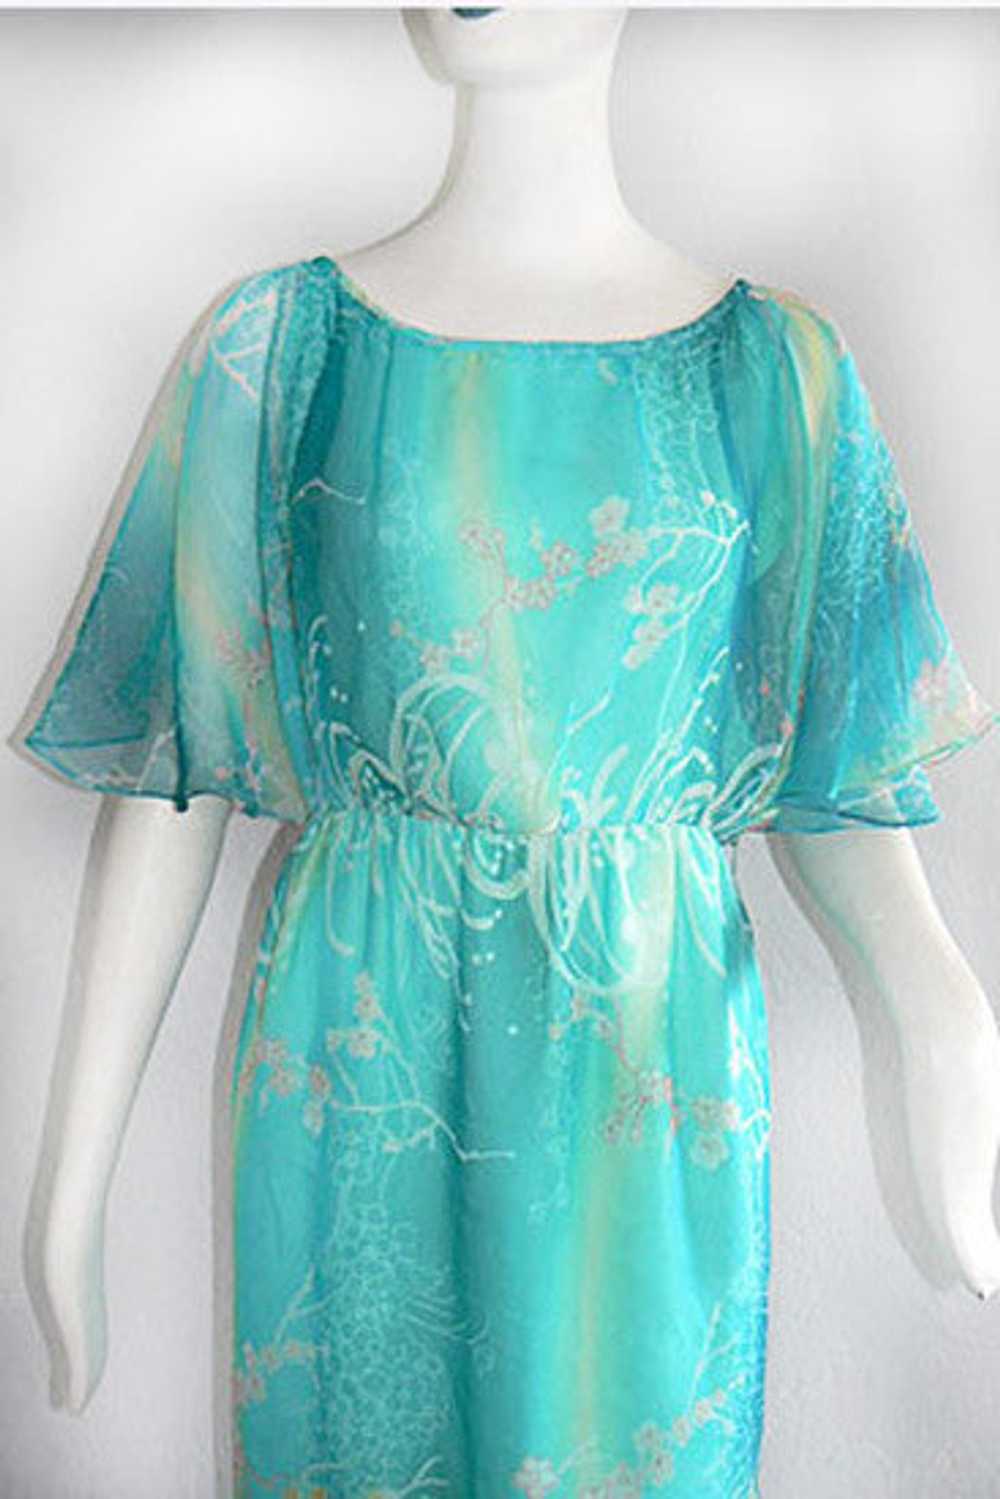 1970s Tina Leser Cherry Blossom Print Dress - image 4